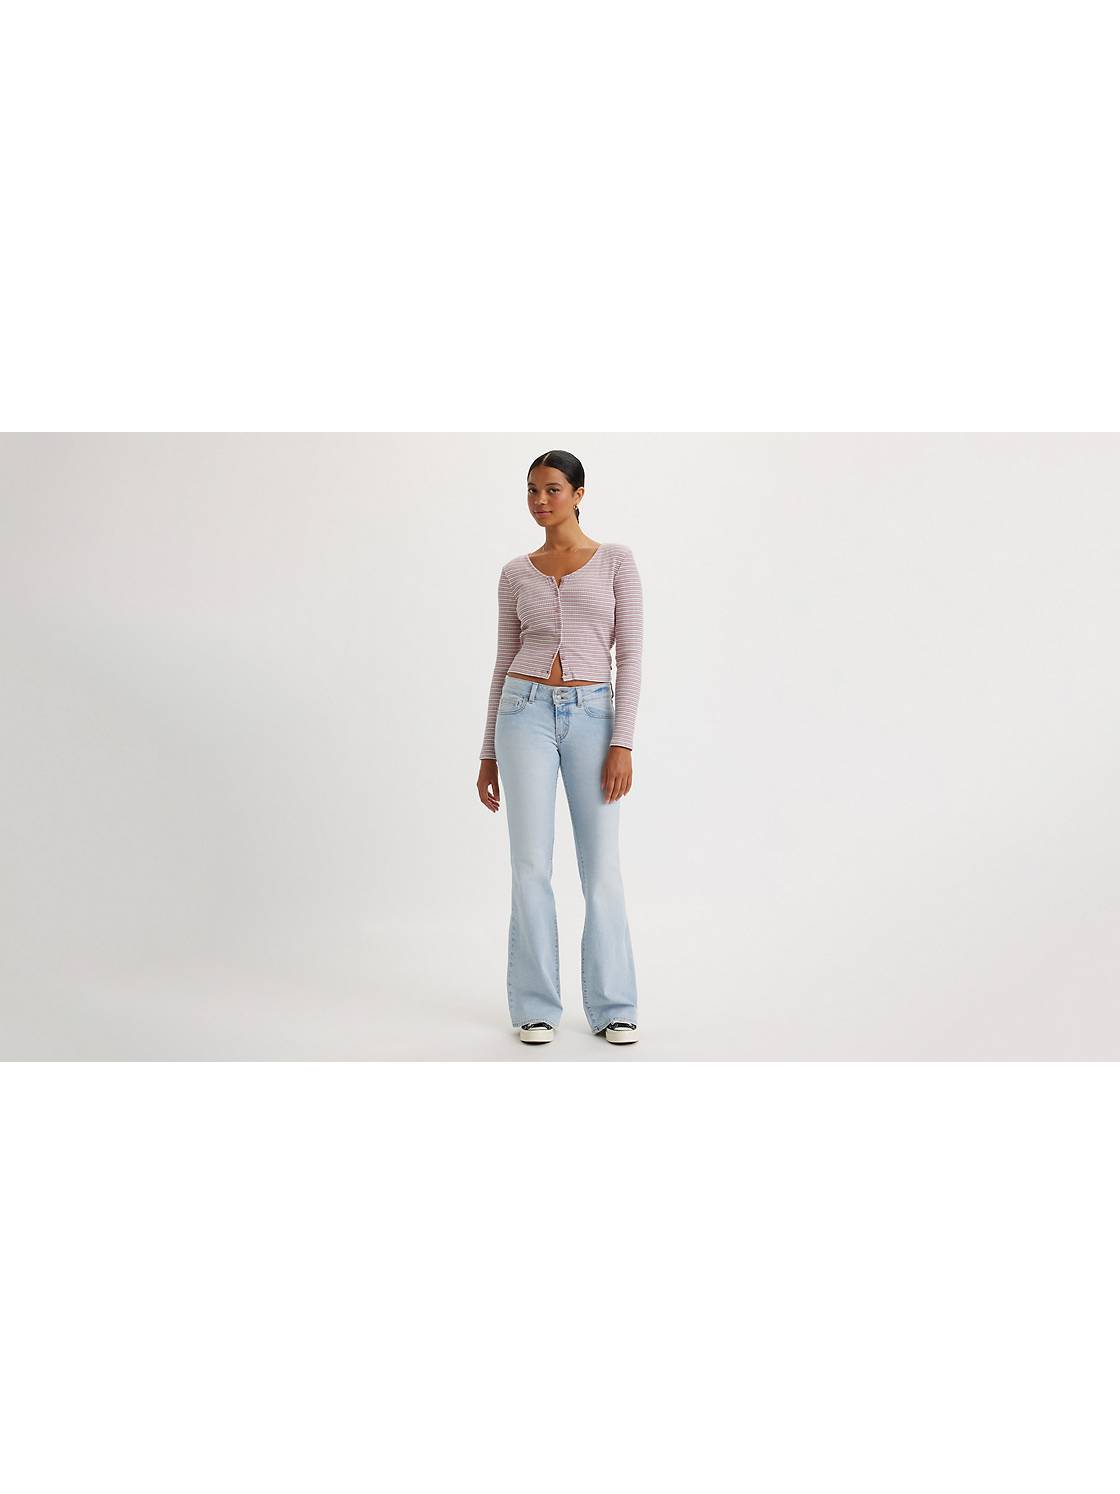 GM FASHION LLP- Women's Lycra Bellbottom pant, trendy Bellbottom For Girls  And Women